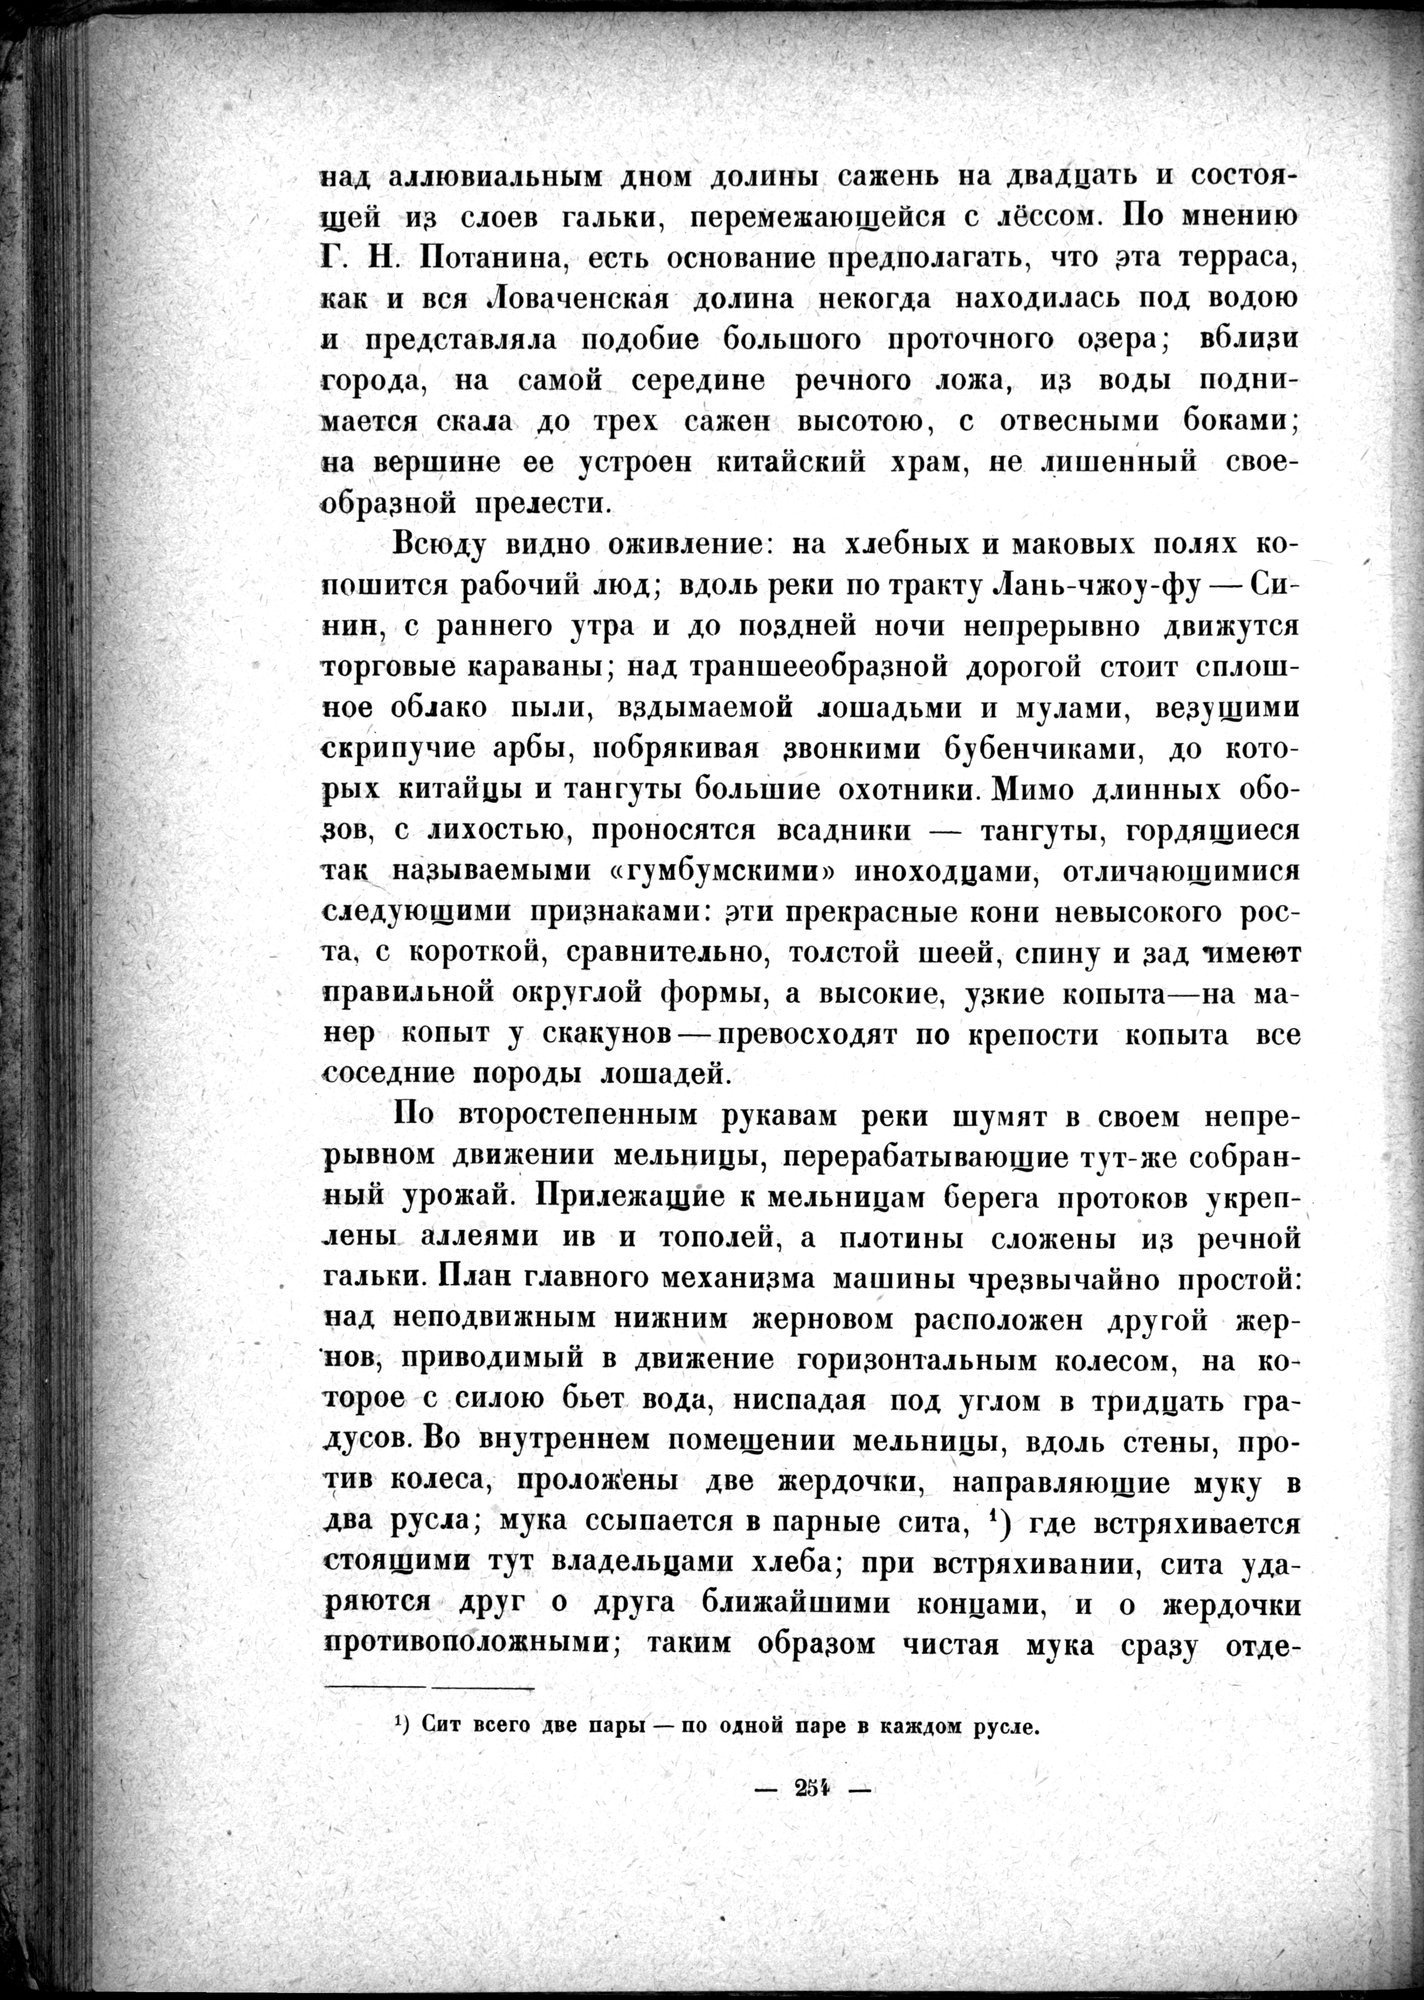 Mongoliya i Amdo i mertby gorod Khara-Khoto : vol.1 / Page 300 (Grayscale High Resolution Image)